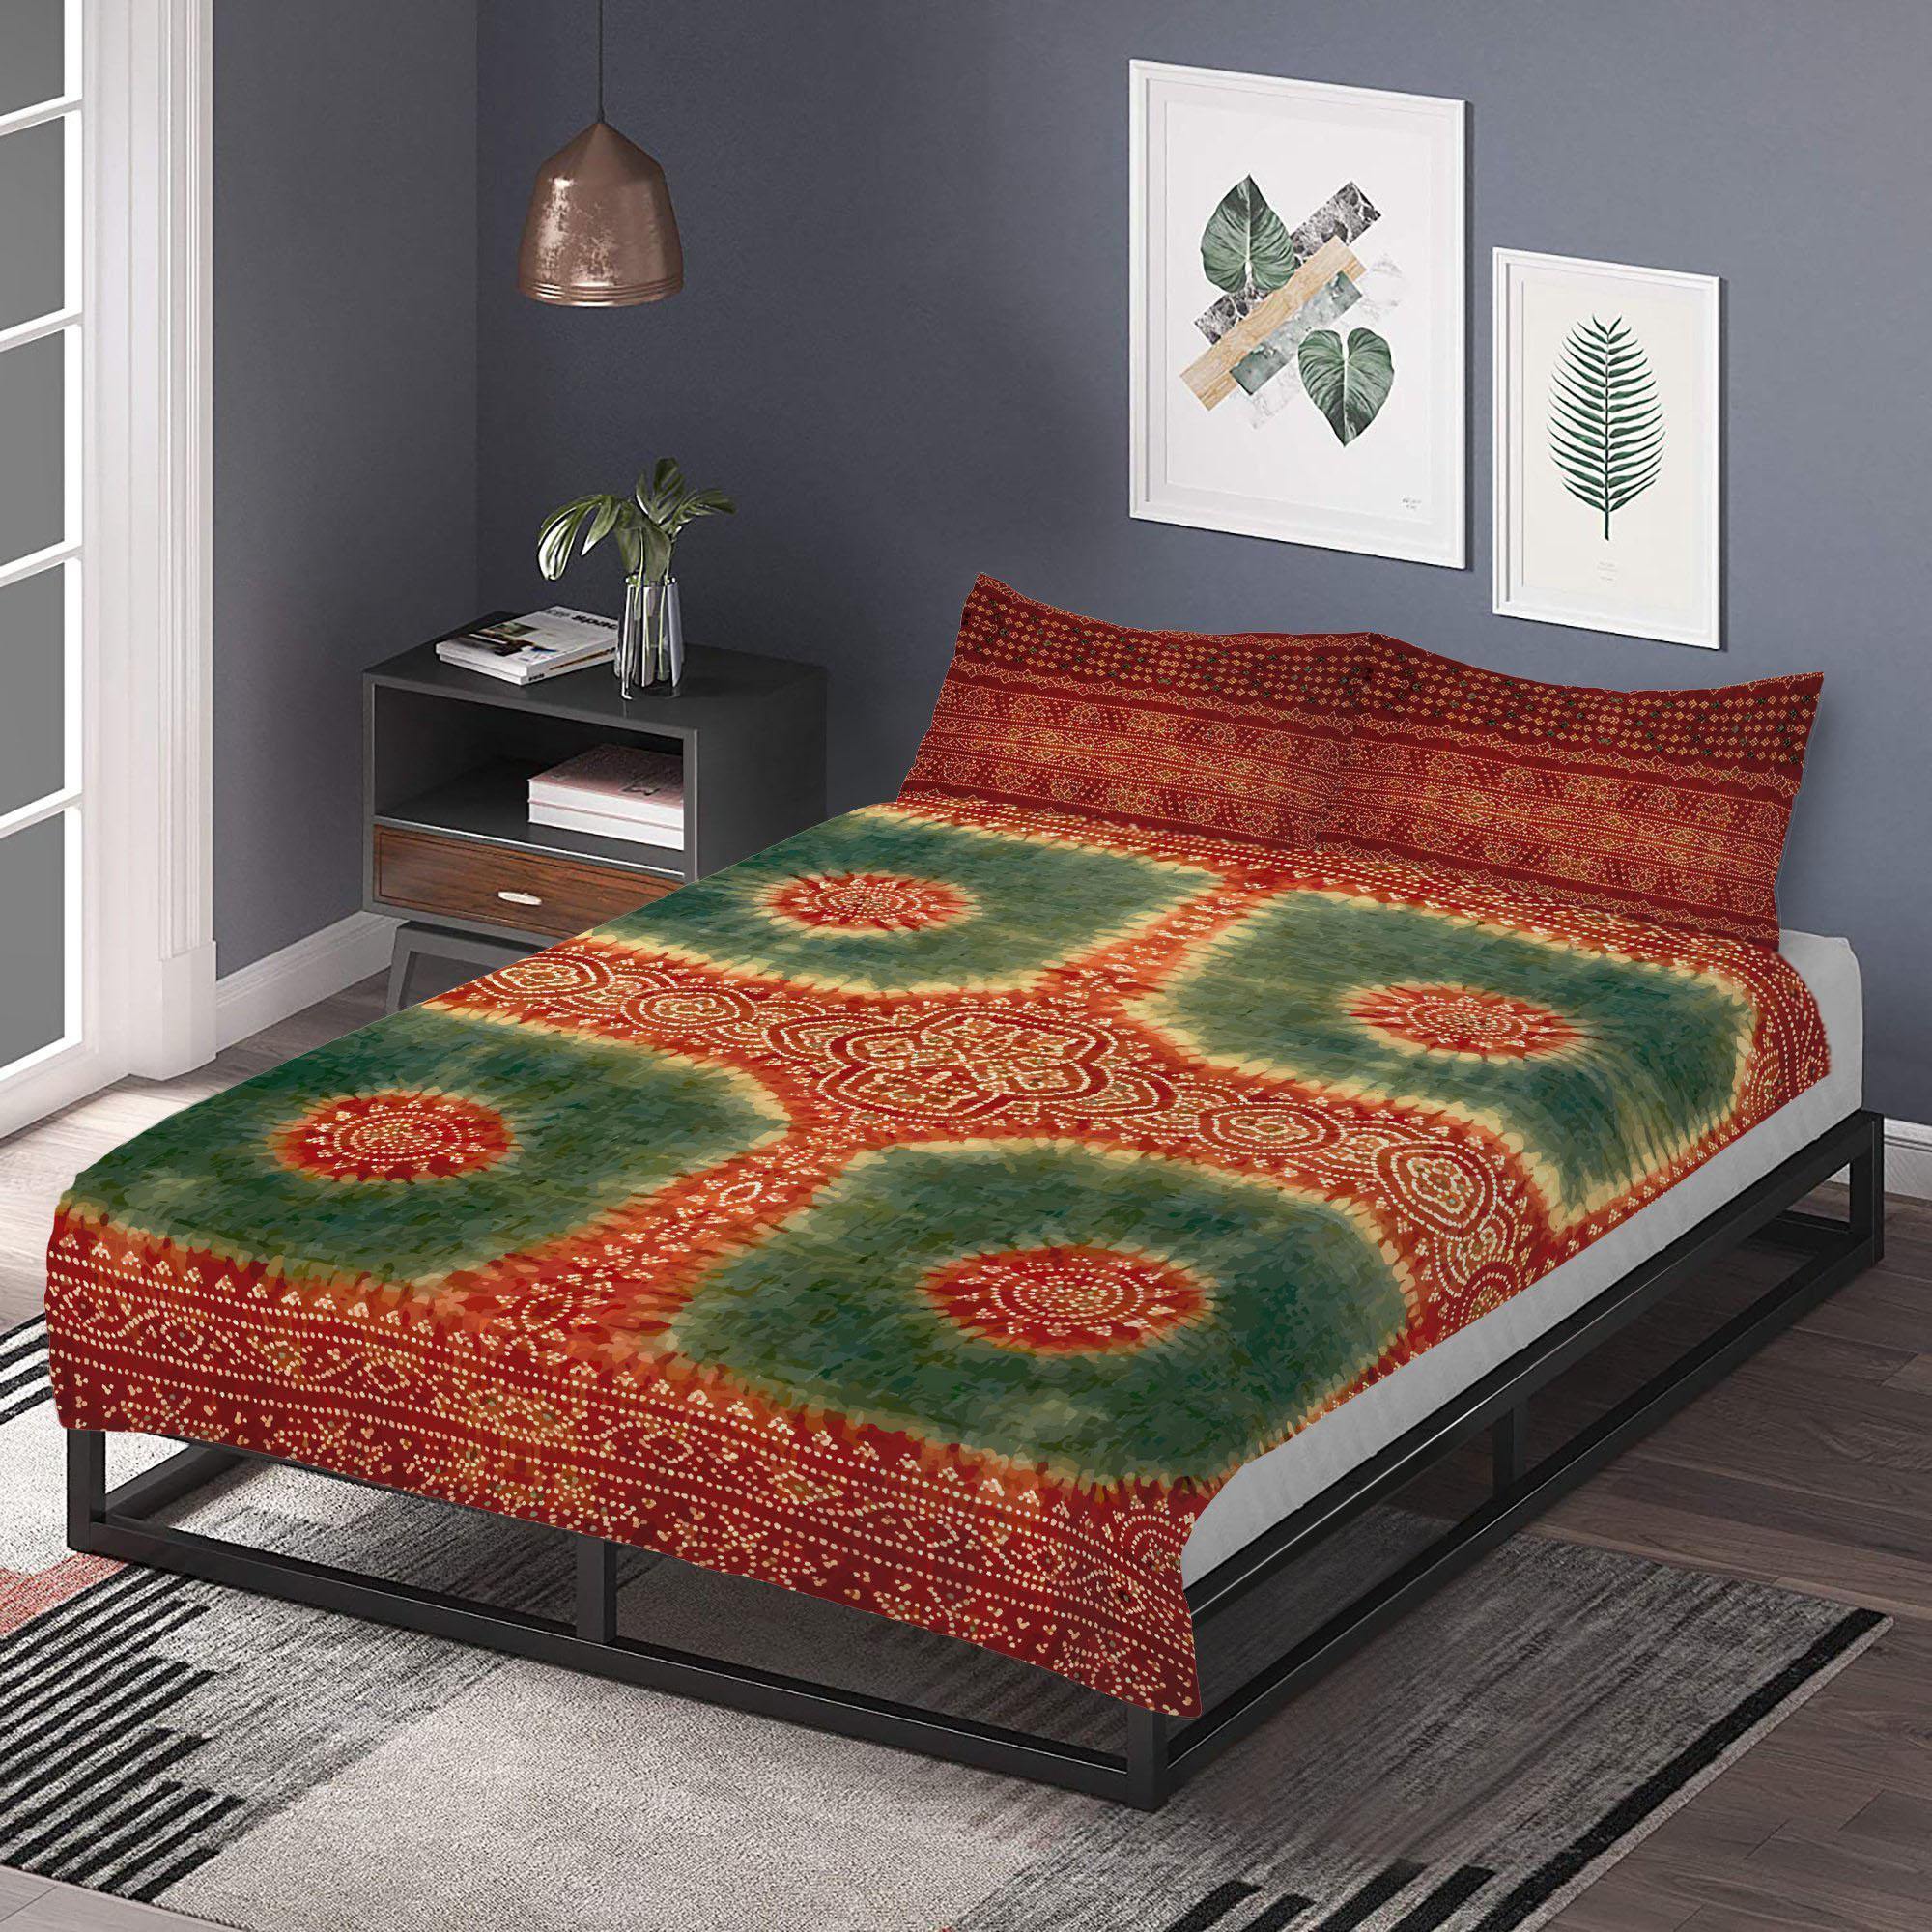 Bedding sets Bedding Set, India Patori-Style Antique Design